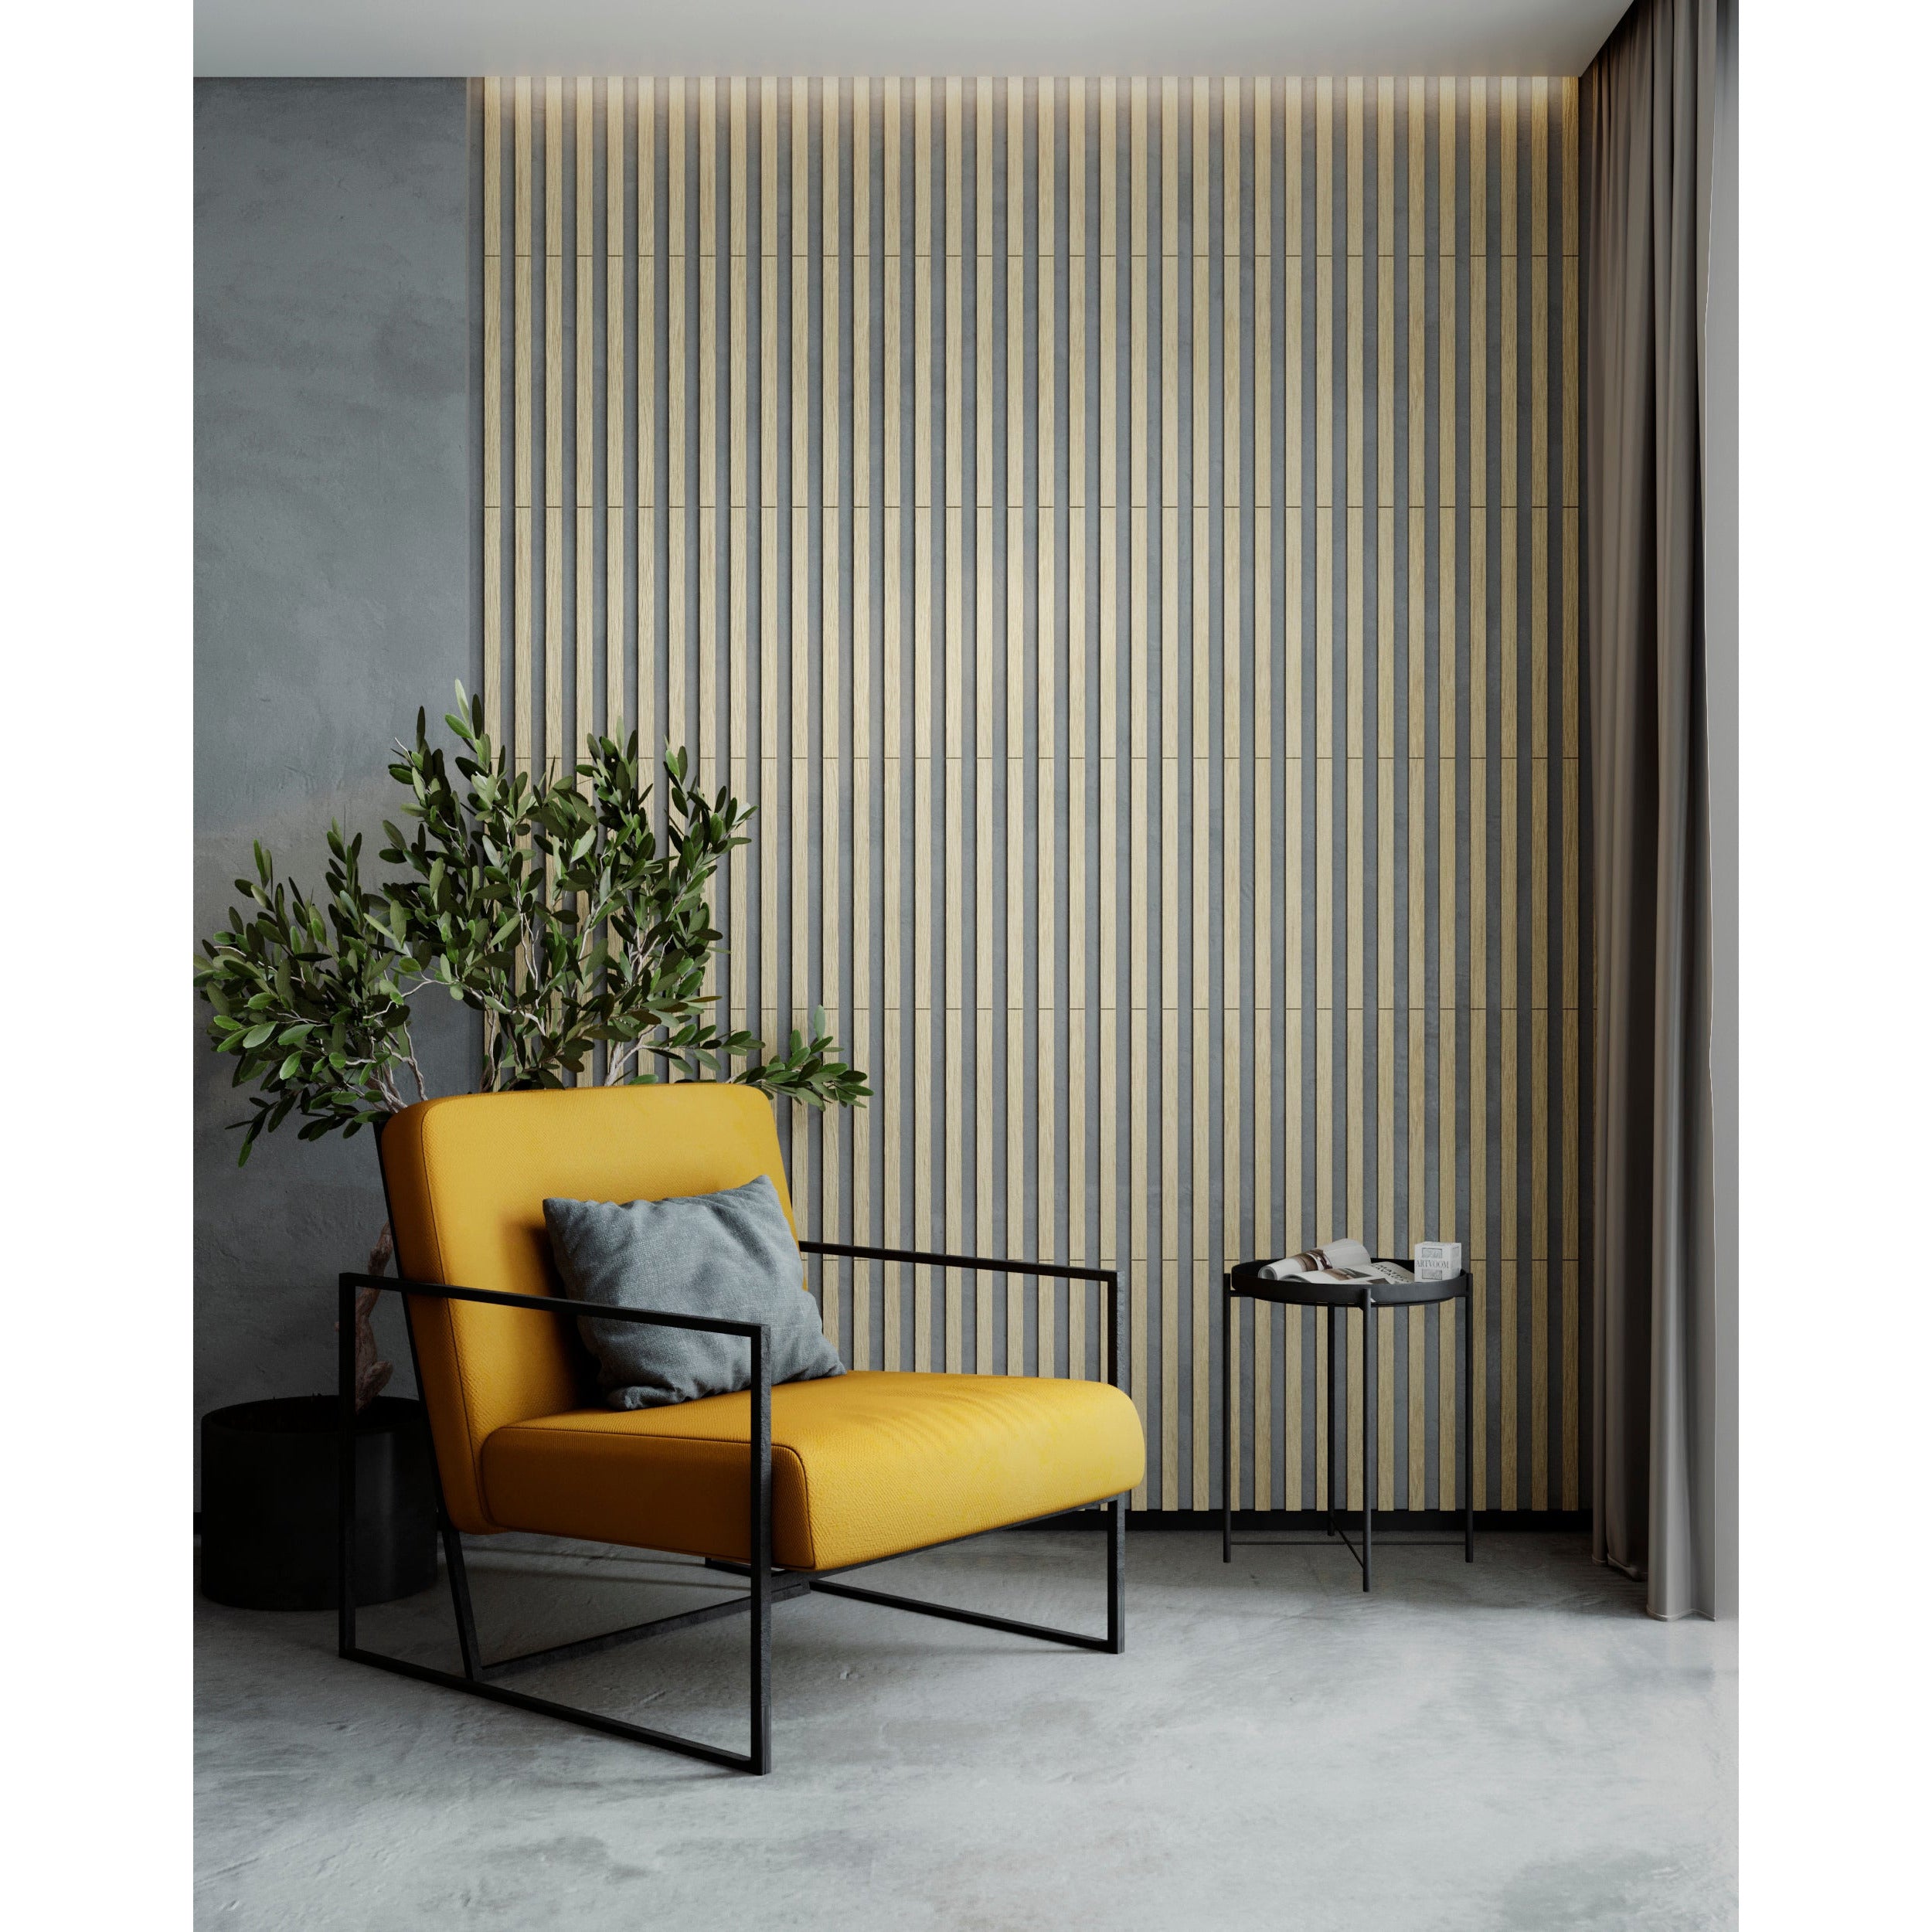 Decorative Wood Panels Tiles & Plank Design Wall | Artvoom